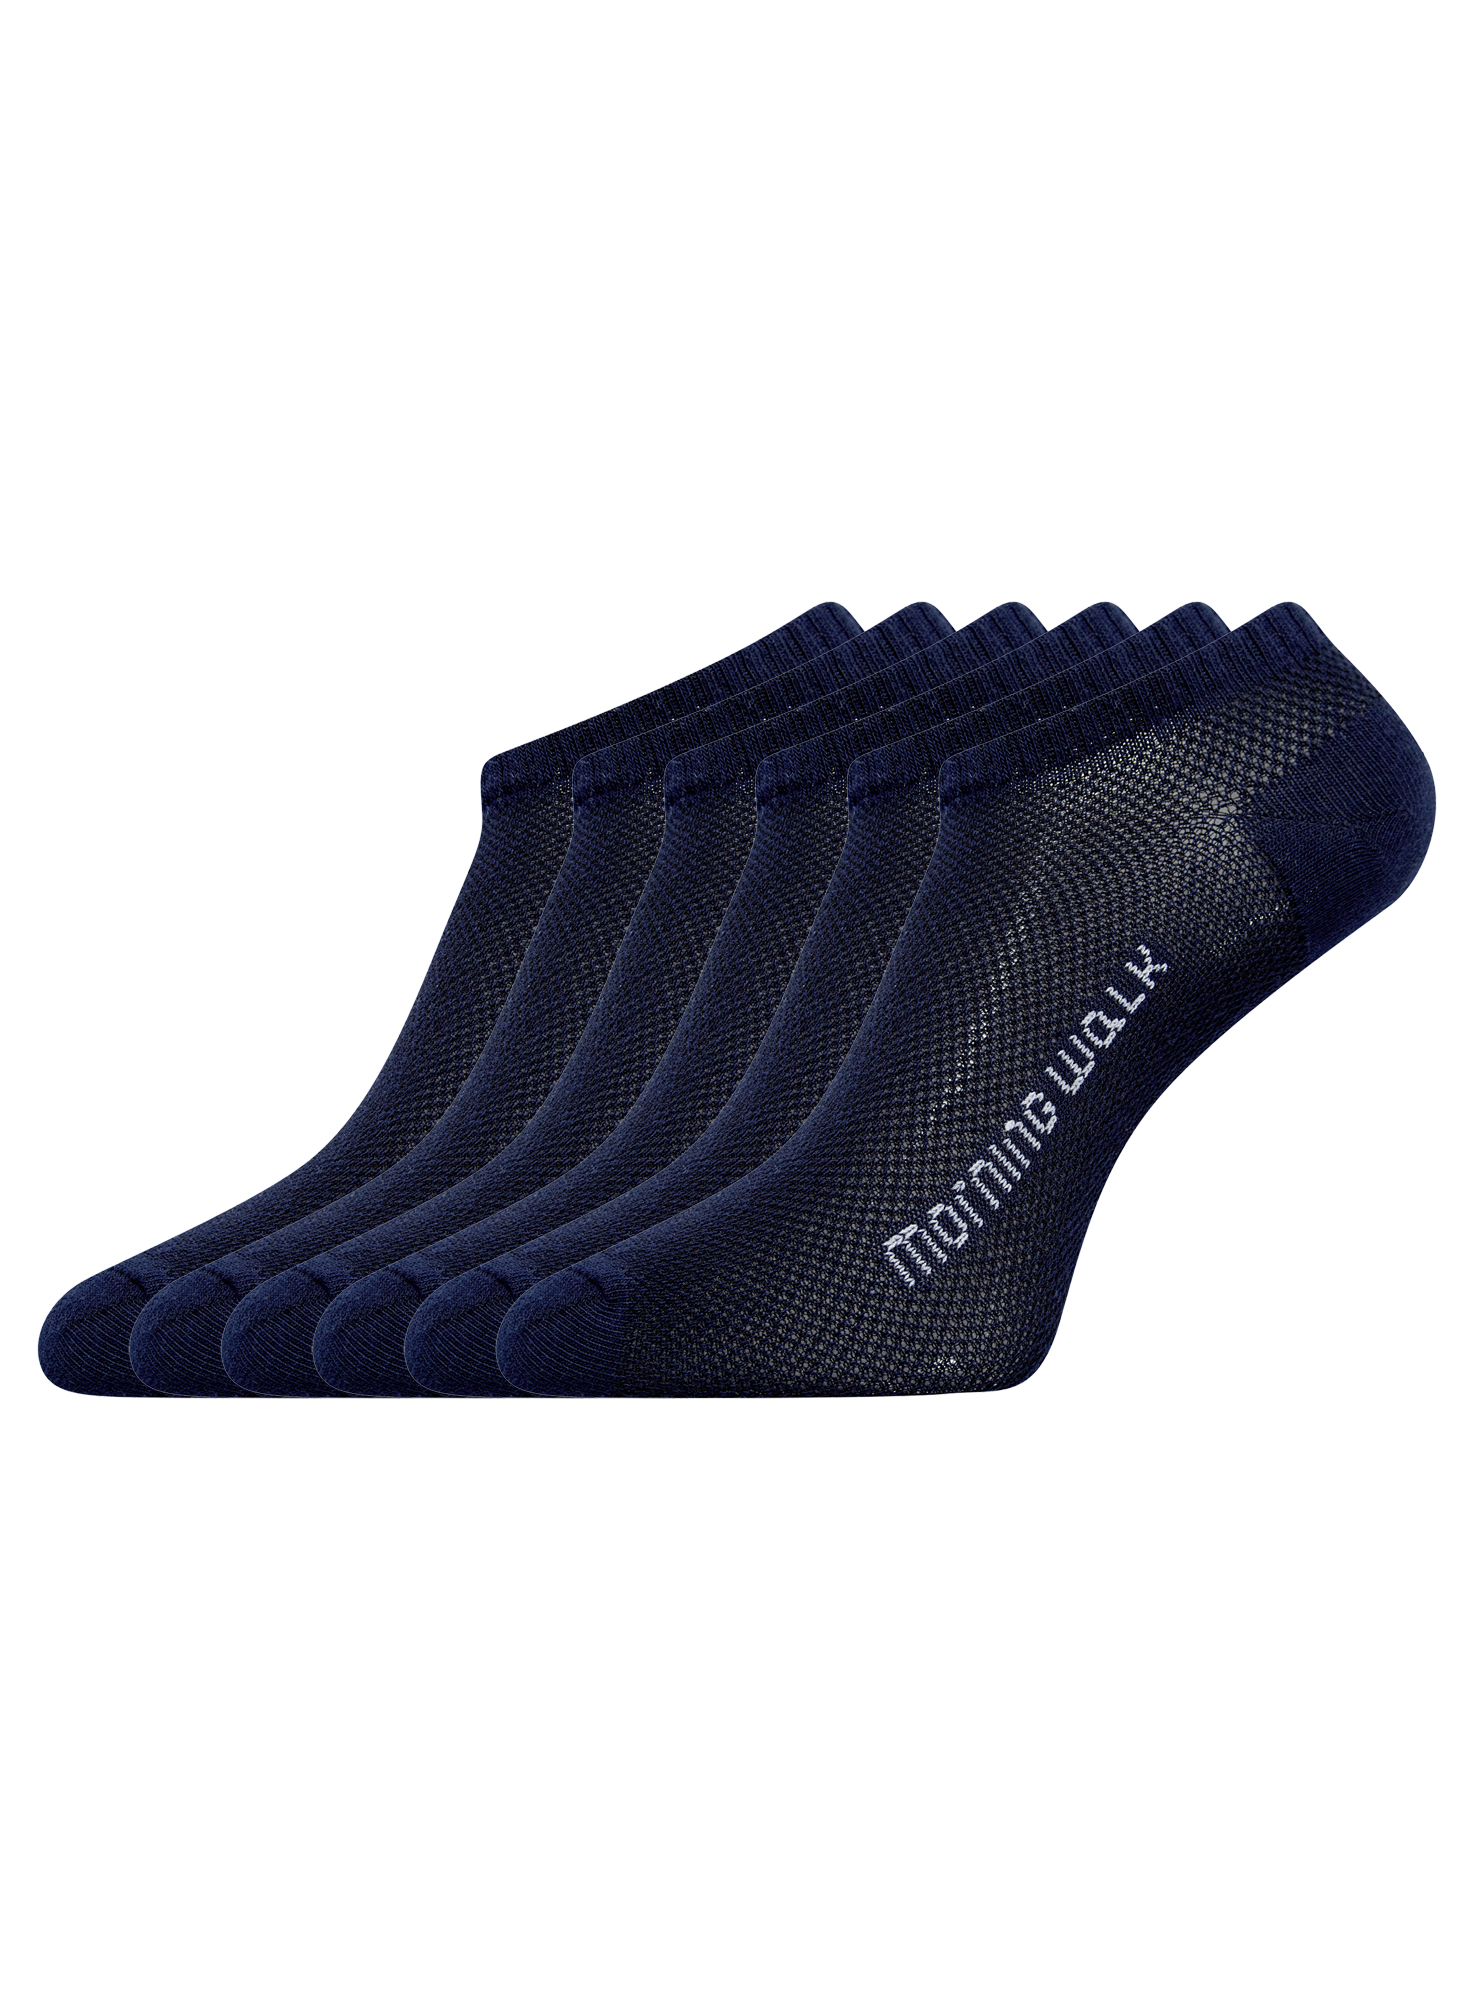 Комплект носков женских oodji 57102438T6 синих 35-37